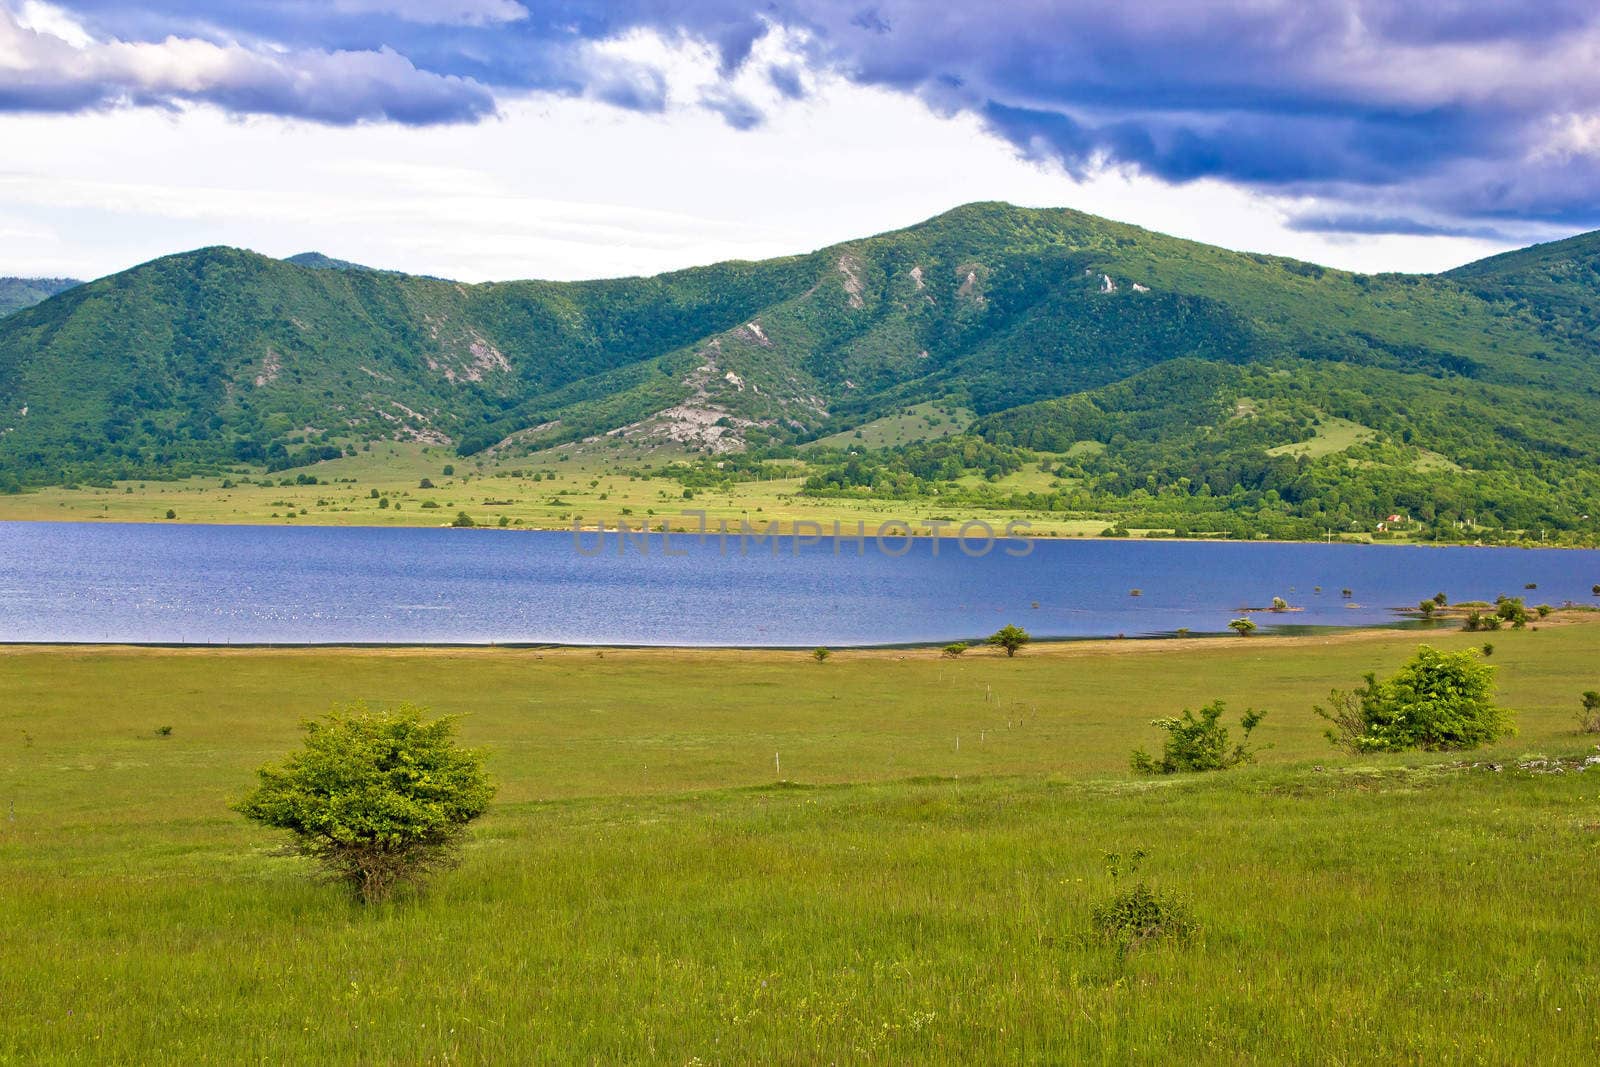 Lika region mountain and lake landscape by xbrchx